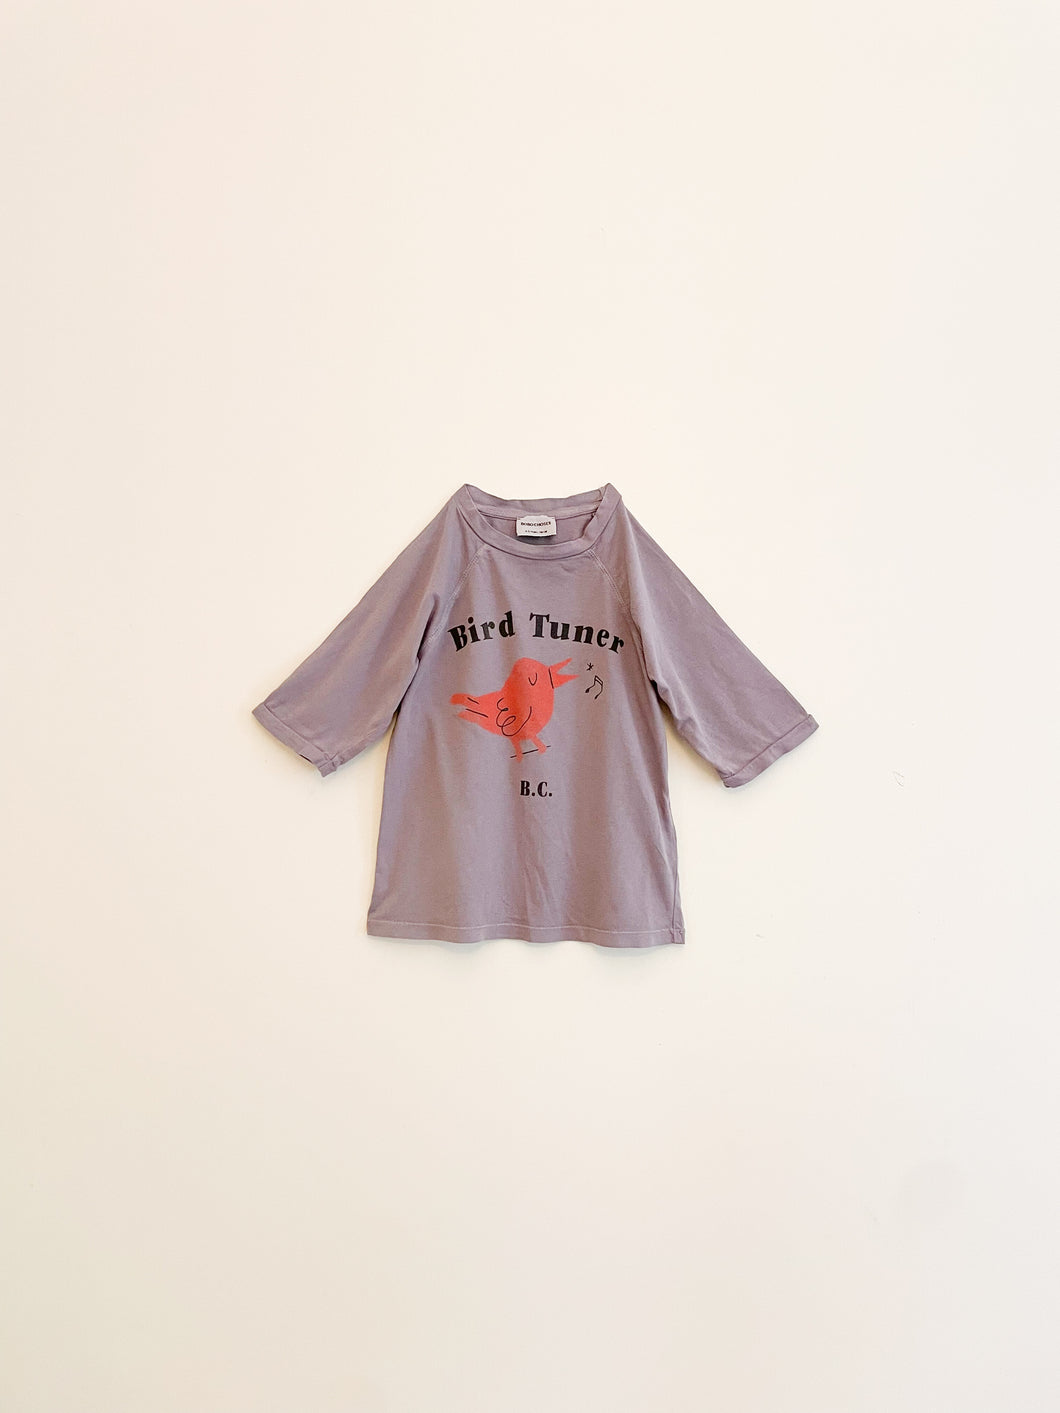 Bird Tuner T-Shirt